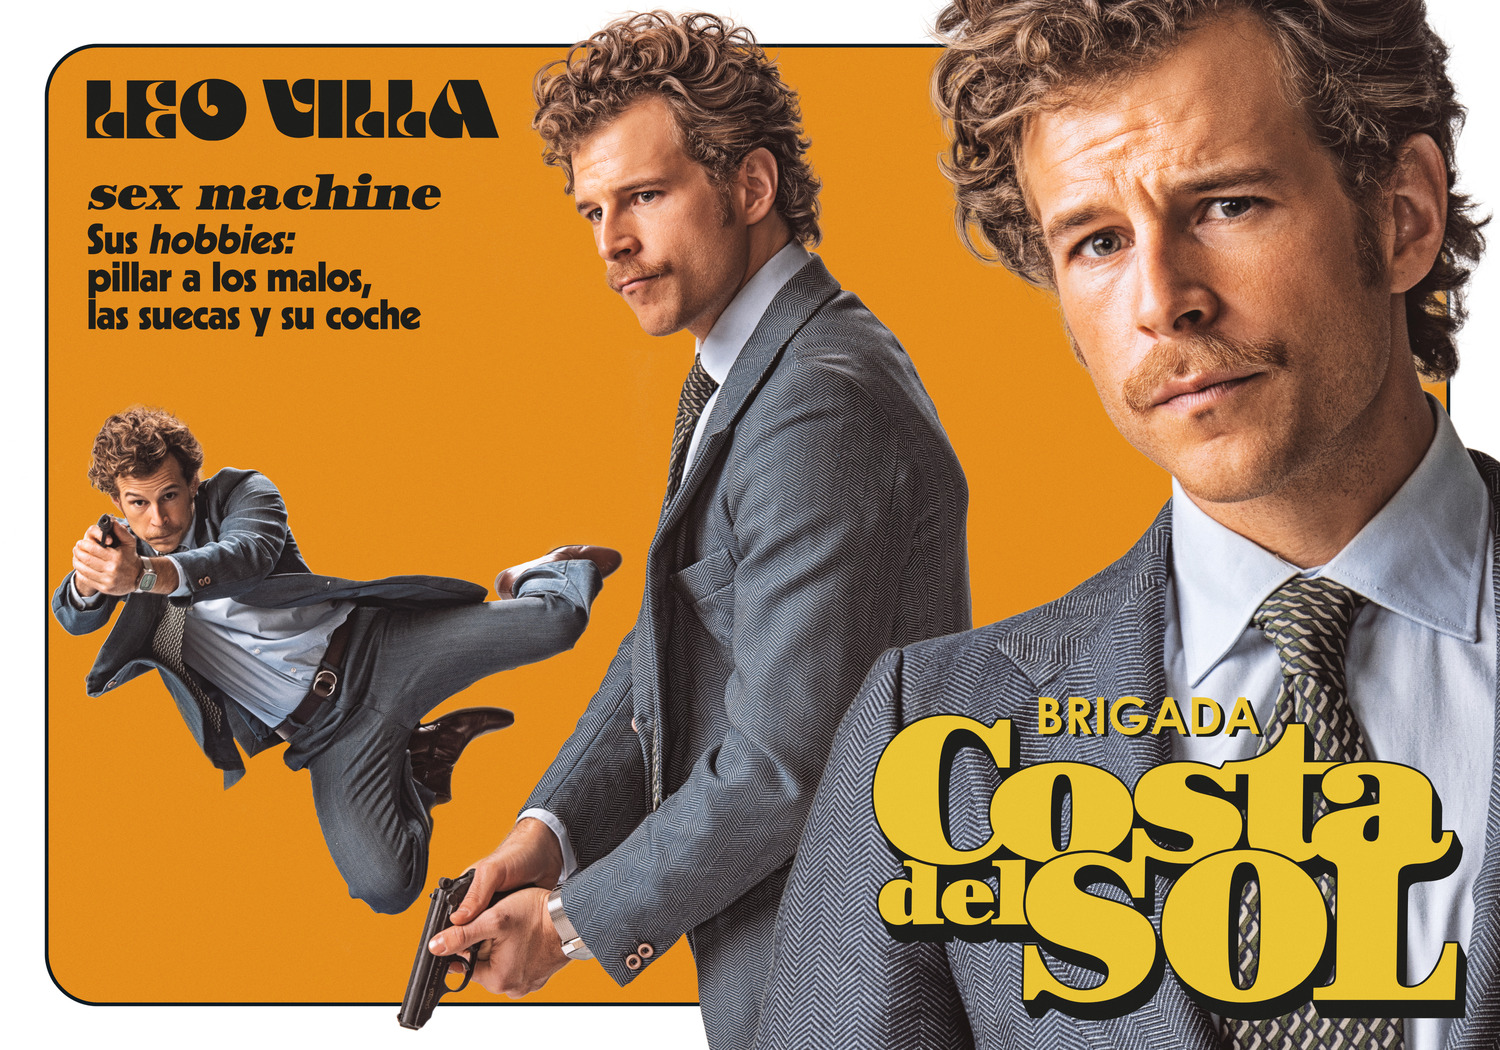 Extra Large TV Poster Image for Brigada Costa del Sol (#17 of 23)